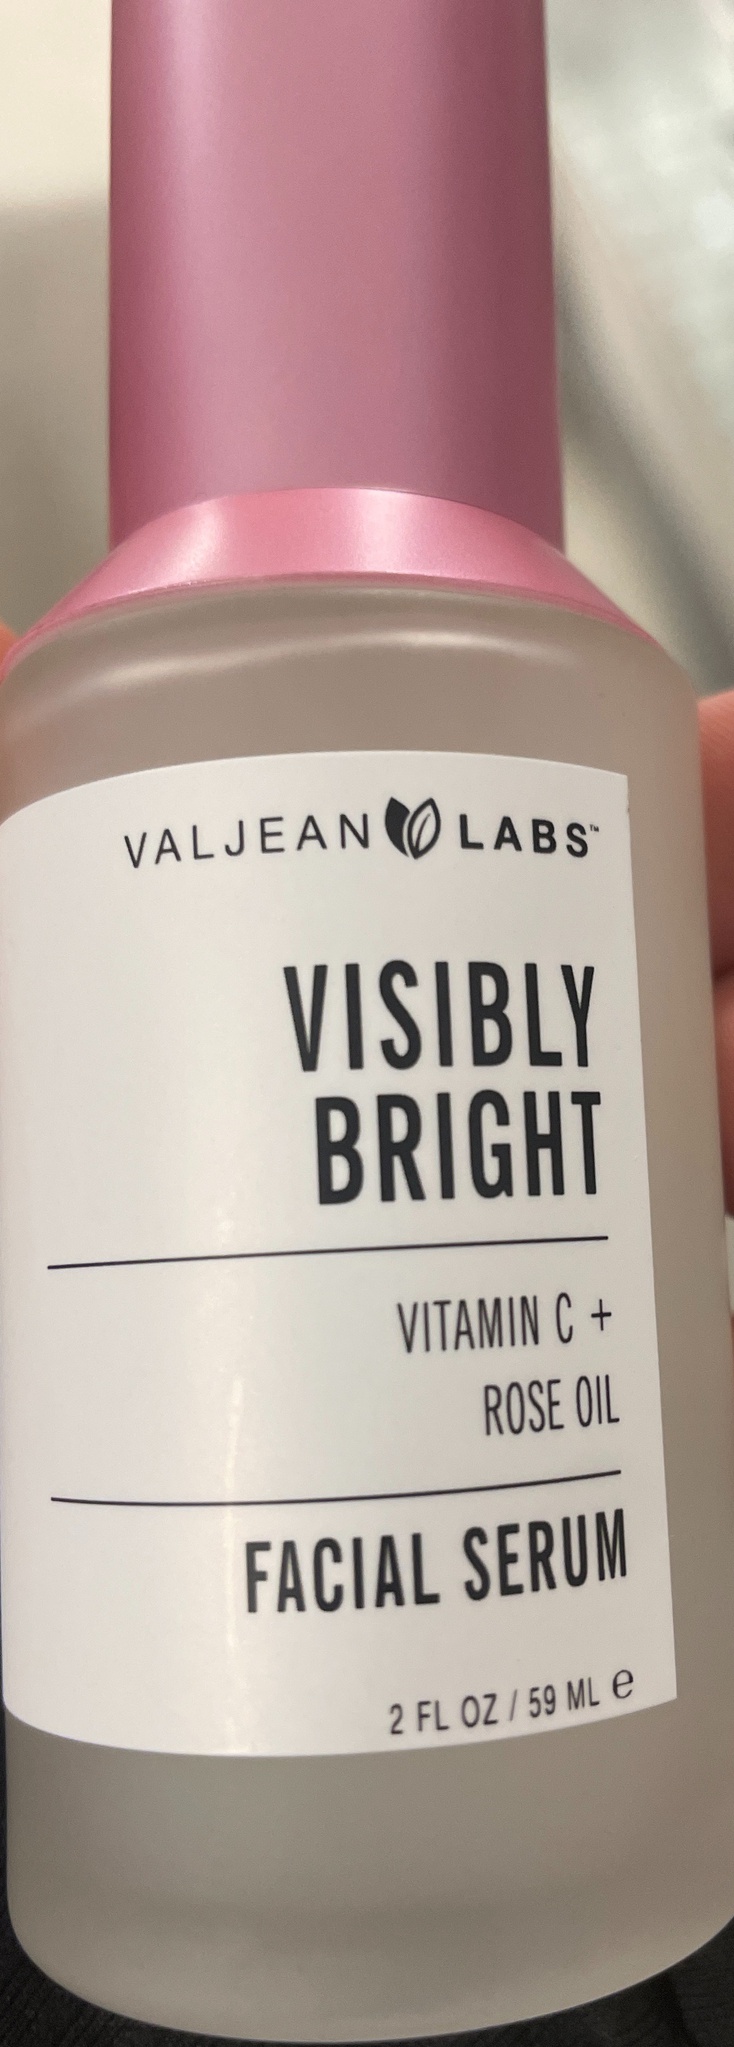 Valjean Labs Visibly Bright Vitamin C + Rose Oil Facial Serum